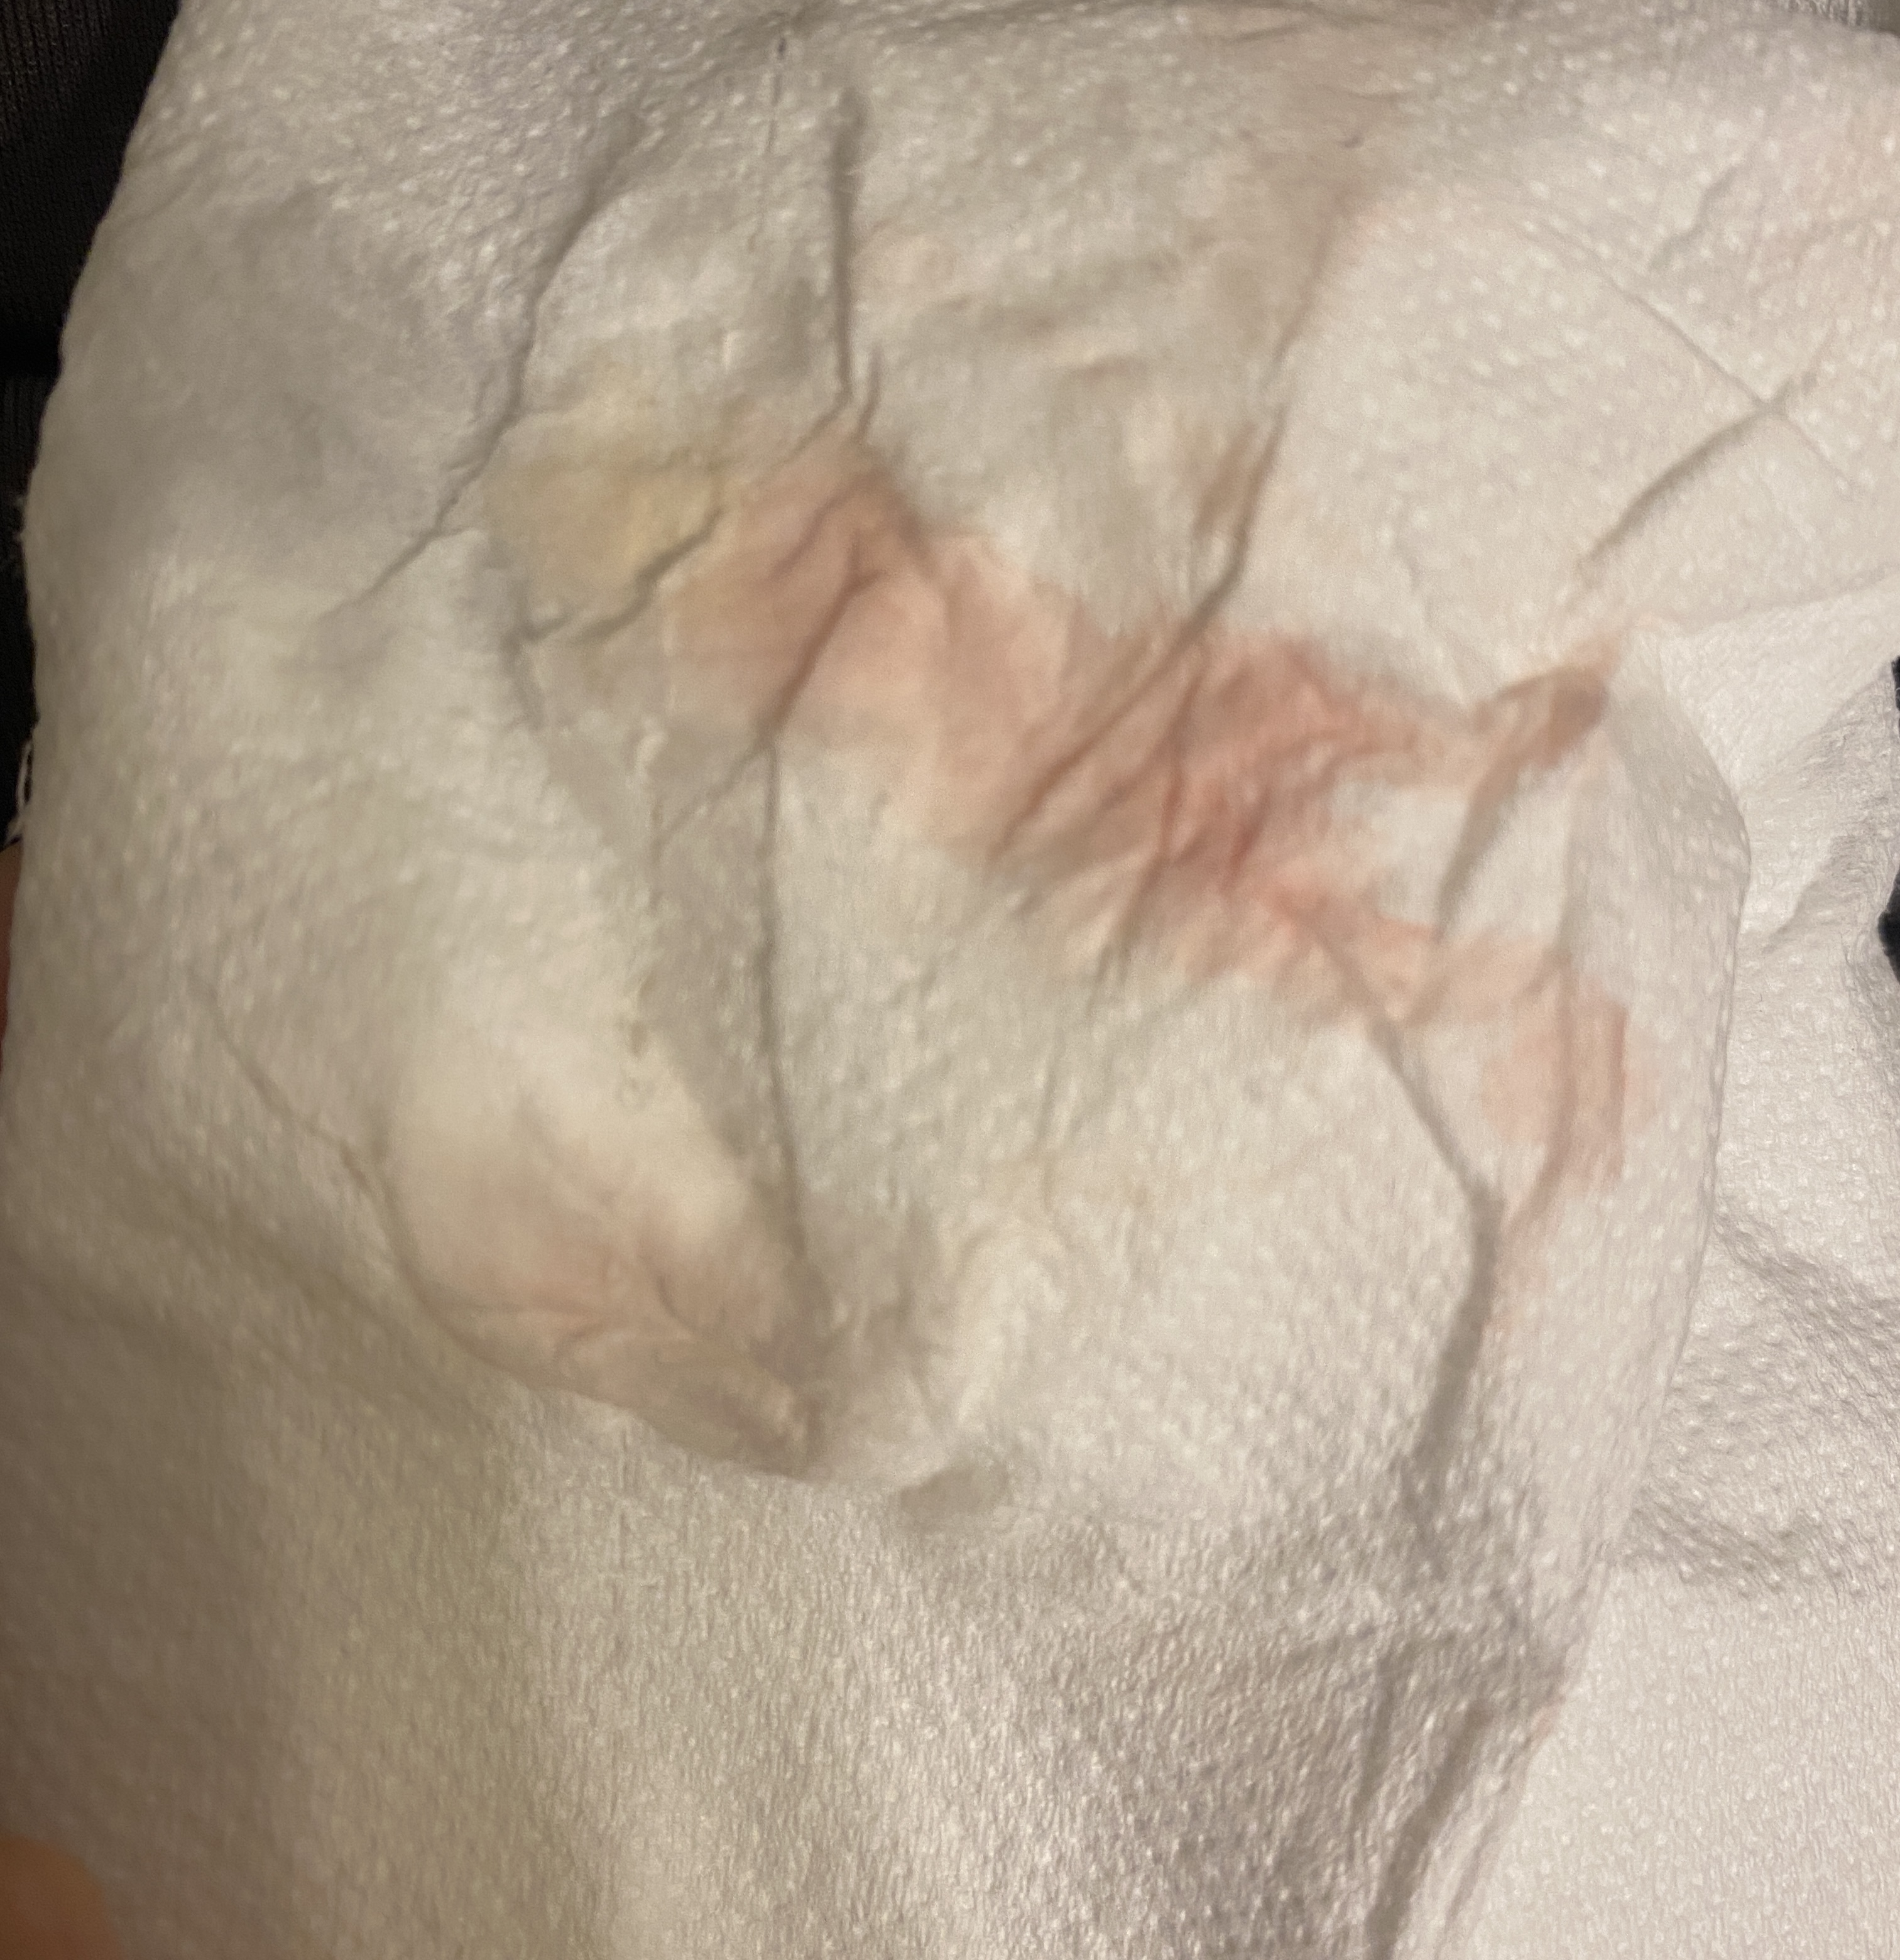 Implantation bleeding or period? PLEASE HELP - 1st Pregnancy